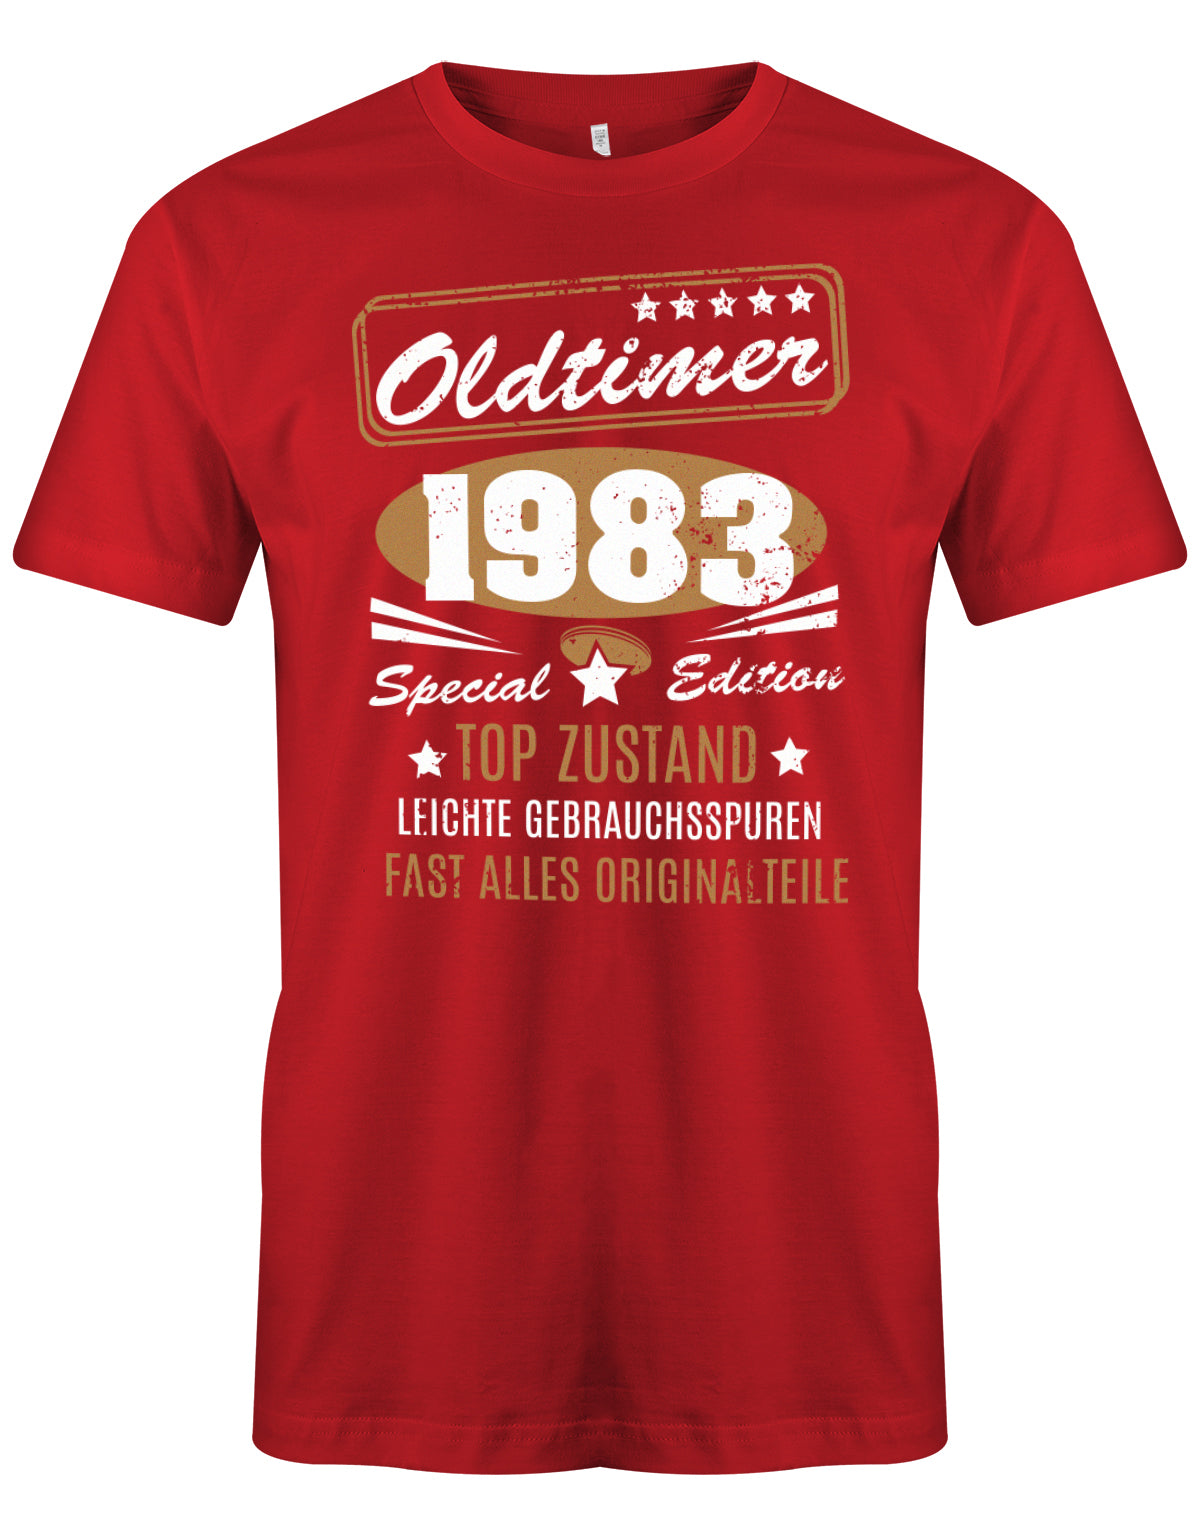 Oldtimer 1983 Special Edition Top Zustand - T-Shirt 40 Geburtstag Männer myShirtStore Rot